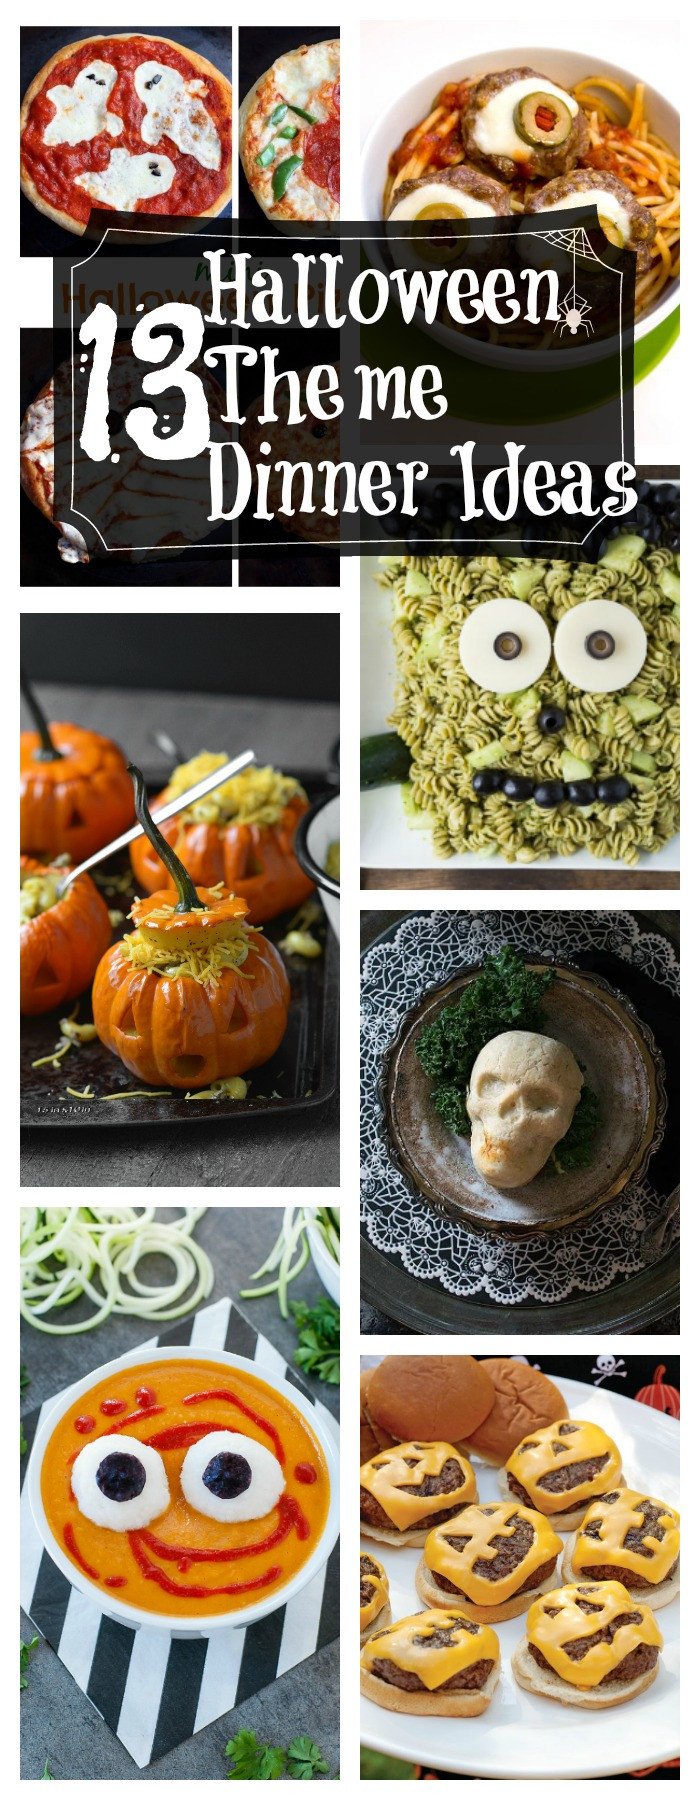 Halloween Inspired Dinners
 13 Healthy Halloween Themed Dinner Ideas